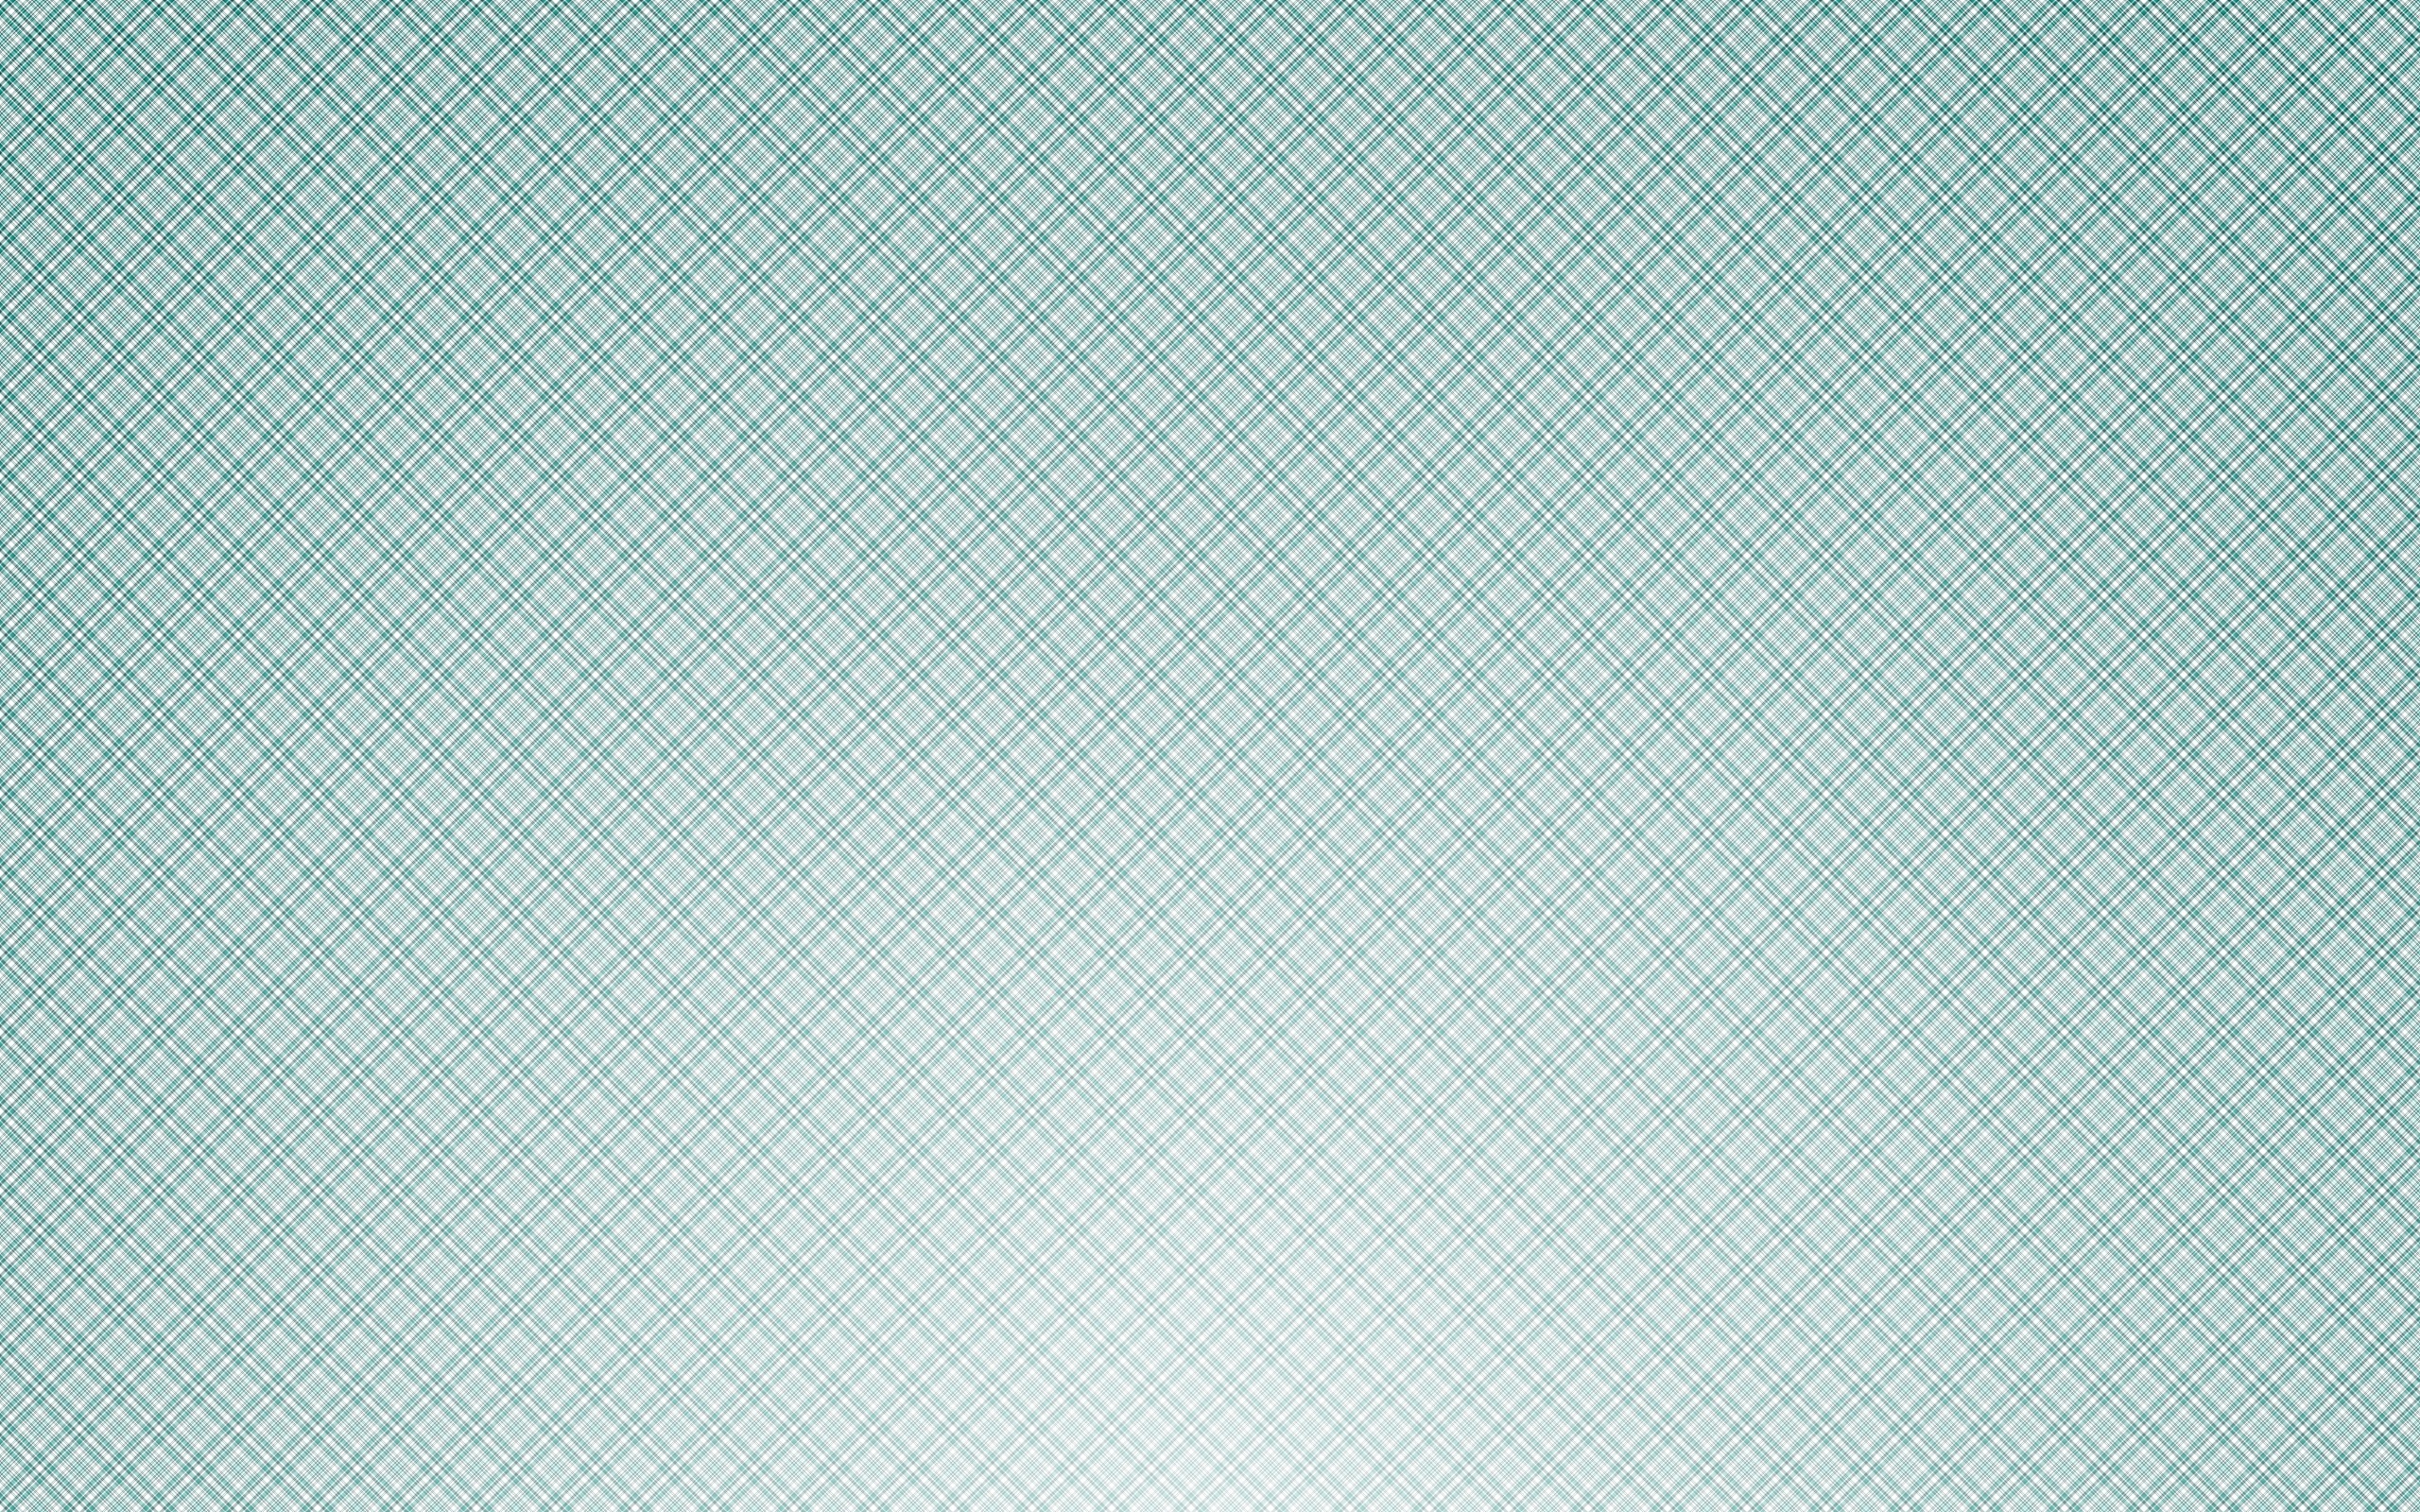 Free Pattern Backgrounds 18345 2560x1600 px ~ HDWallSource.com